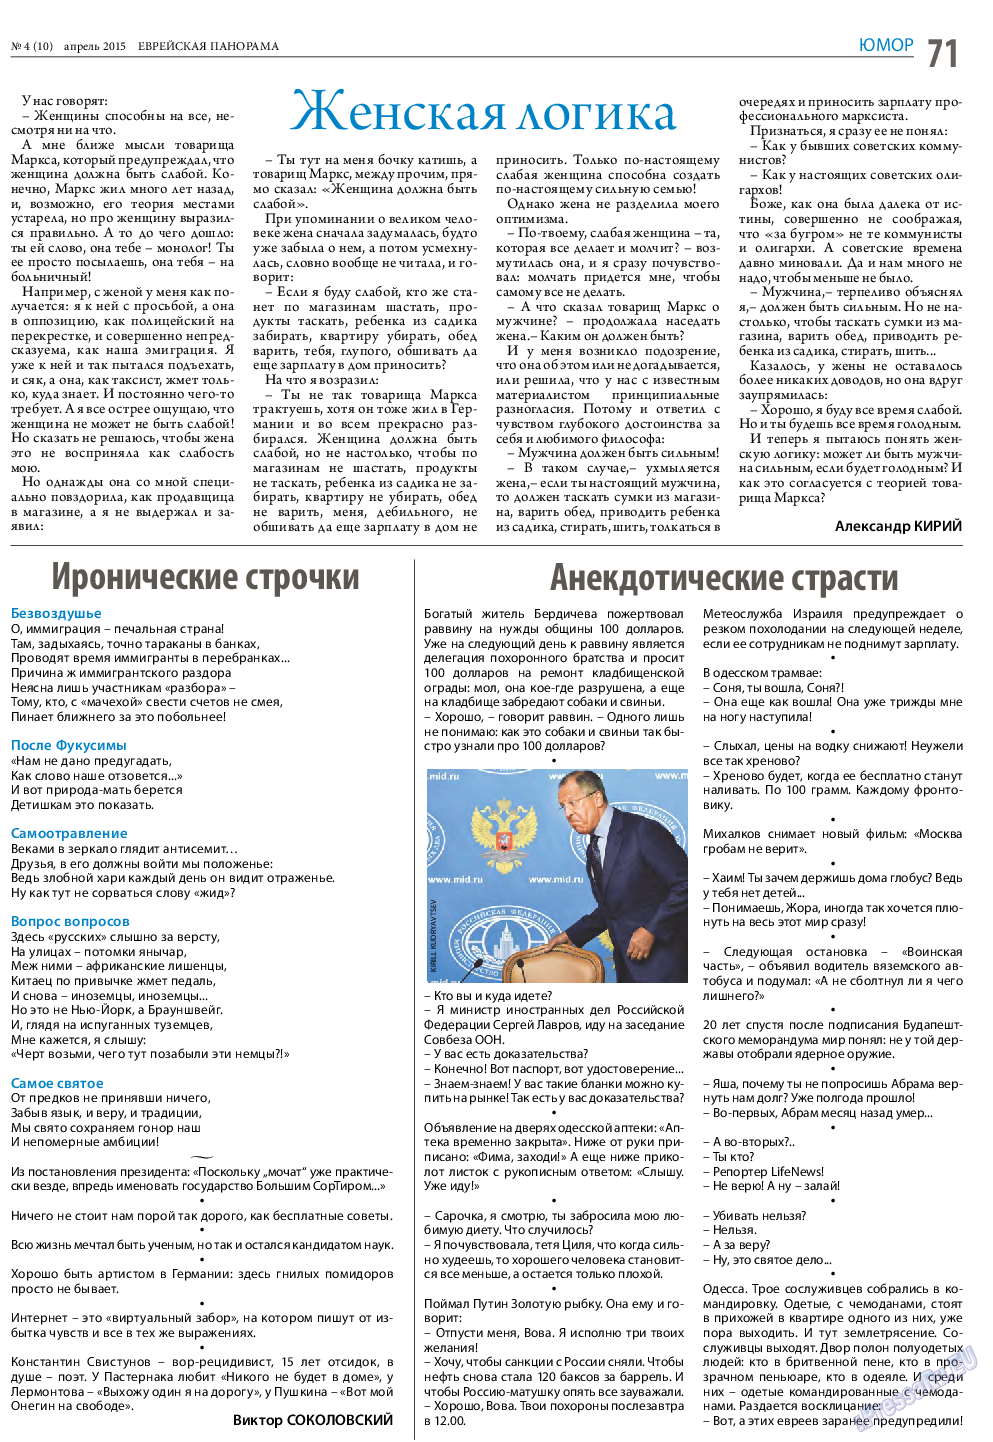 Еврейская панорама, газета. 2015 №4 стр.71